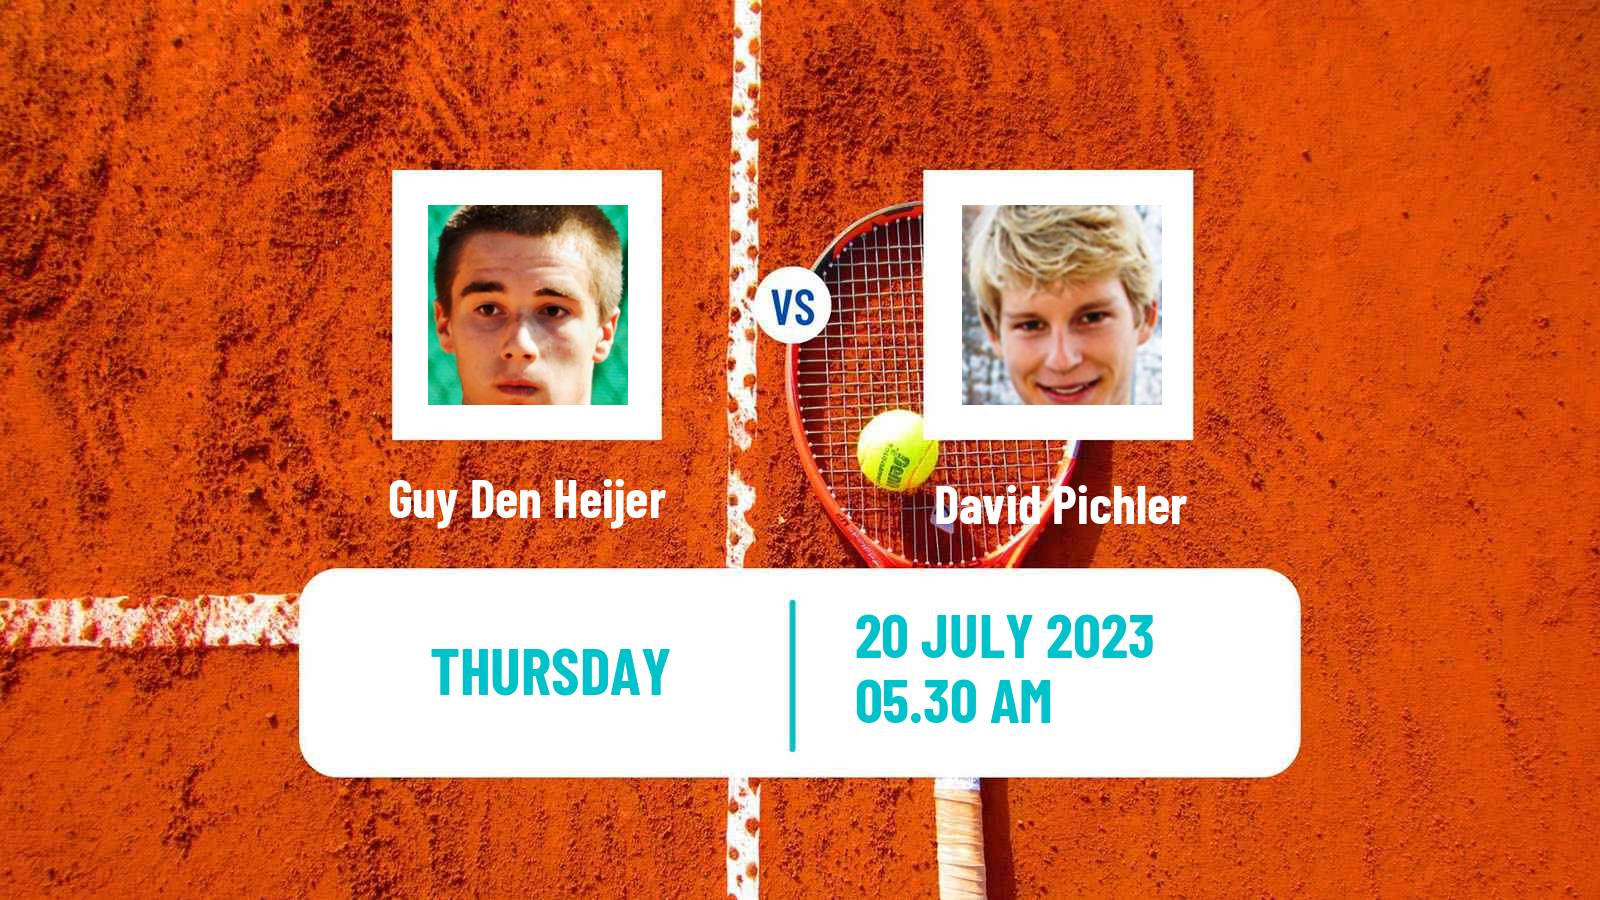 Tennis ITF M25 Esch Alzette 2 Men Guy Den Heijer - David Pichler